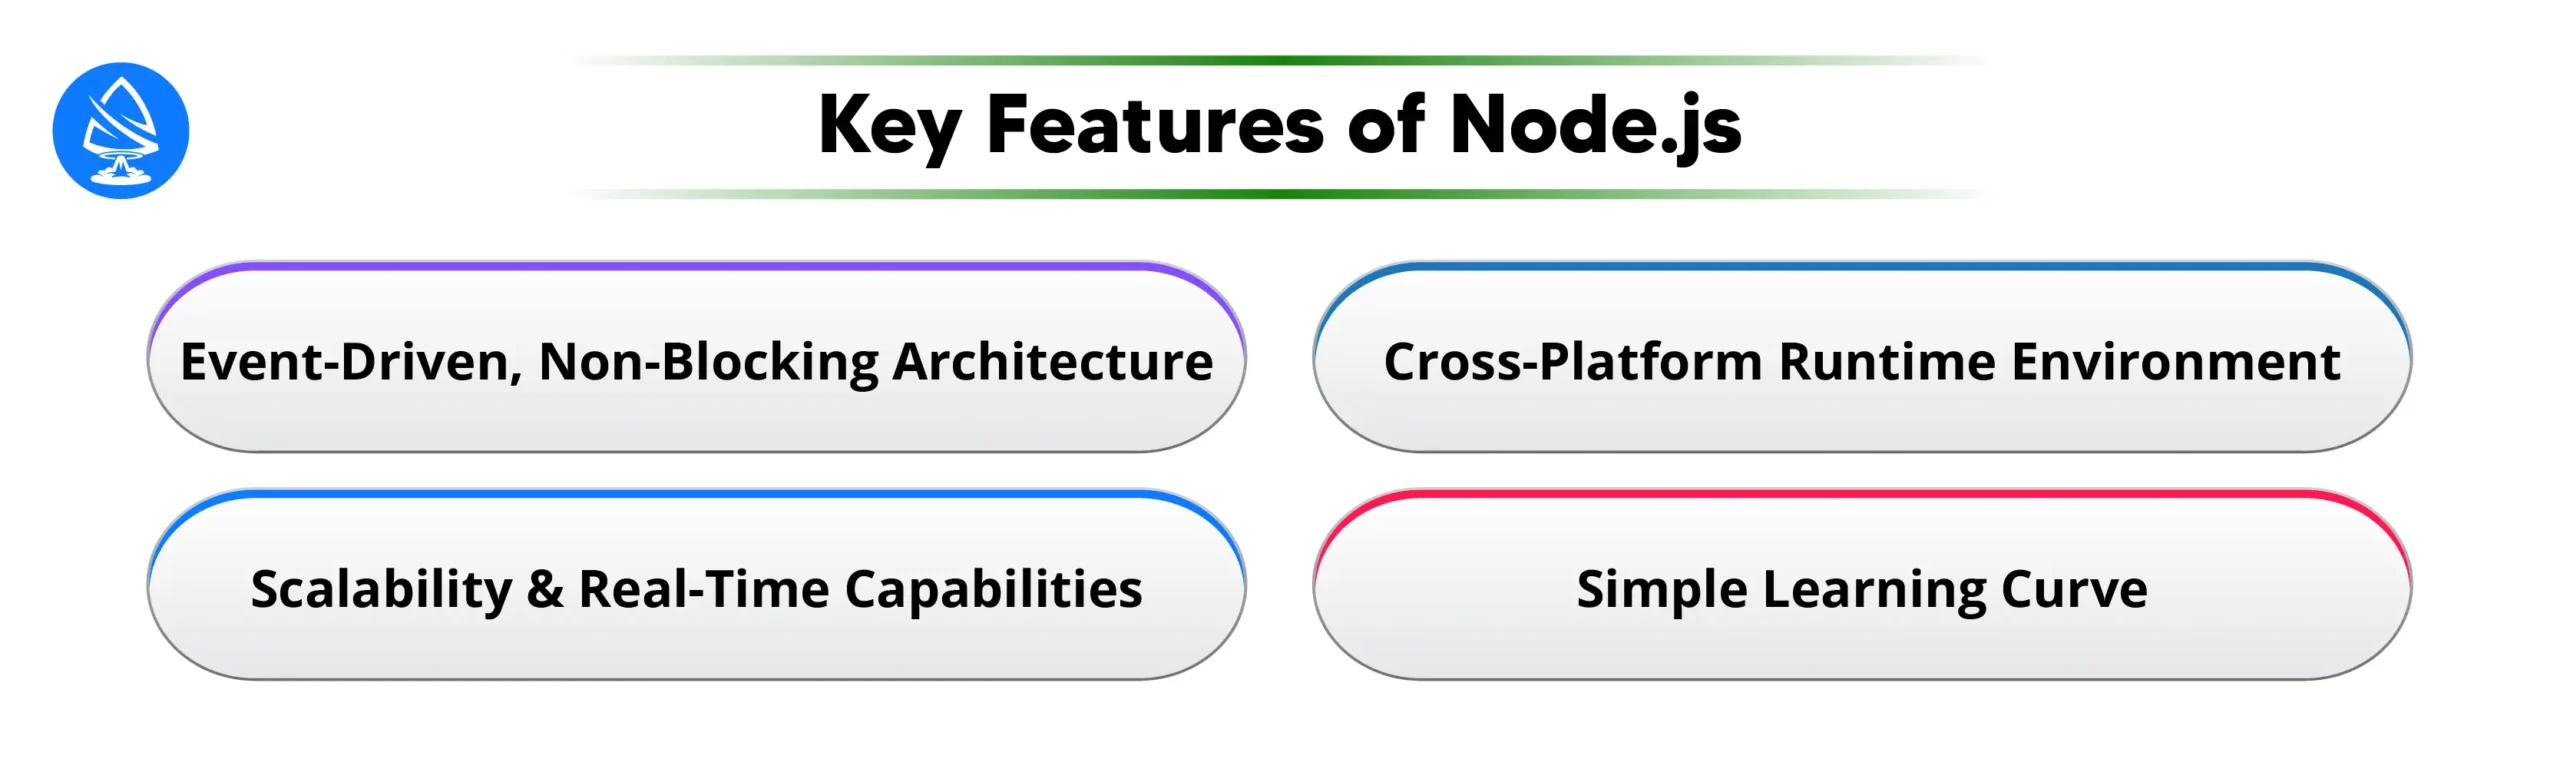 Key Features of Node.js 